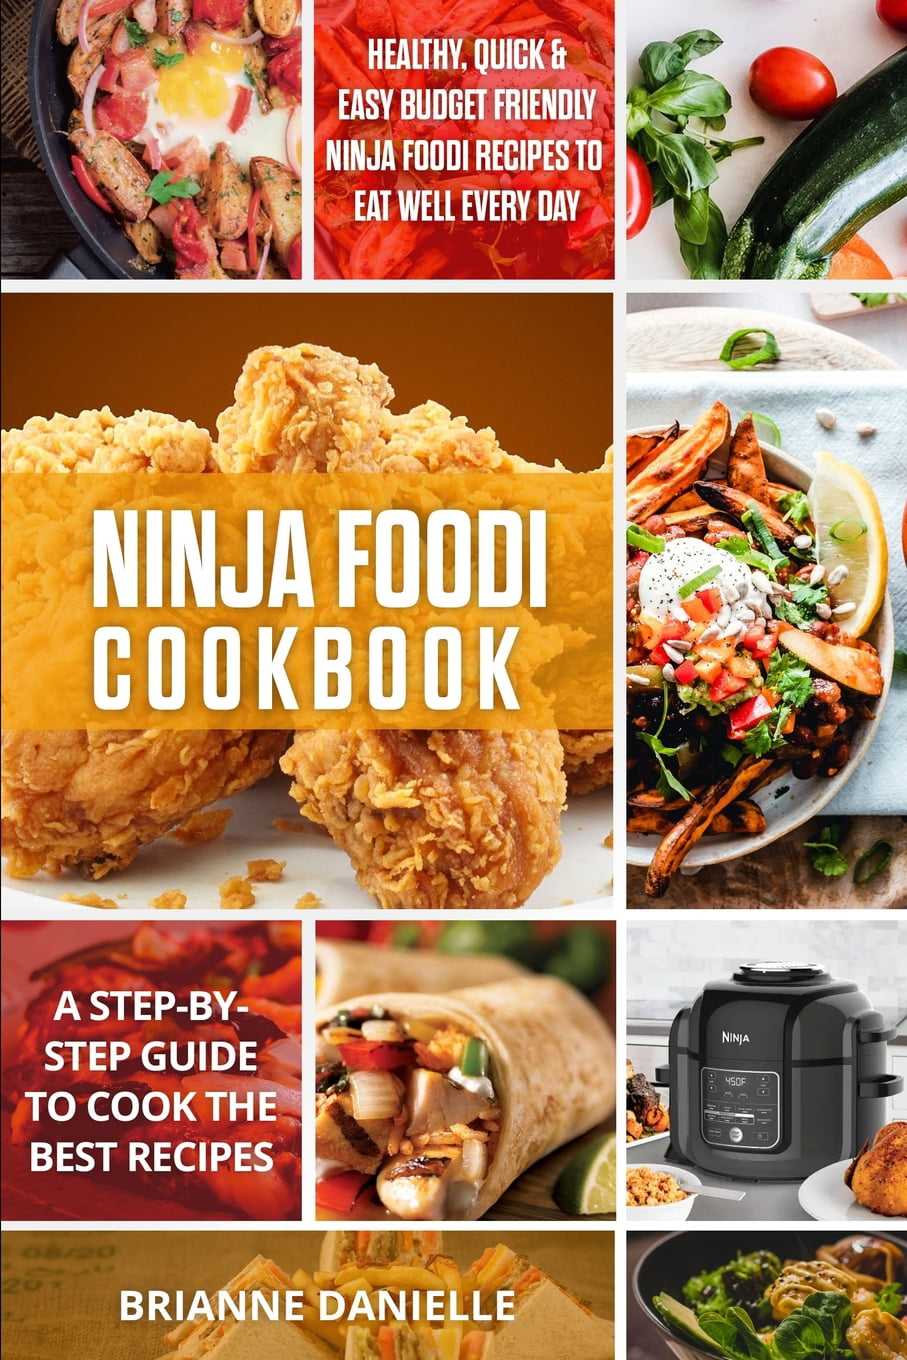 Ninja Foodi Cookbook Healthy, Quick & Easy Budget Friendly Ninja Foodi